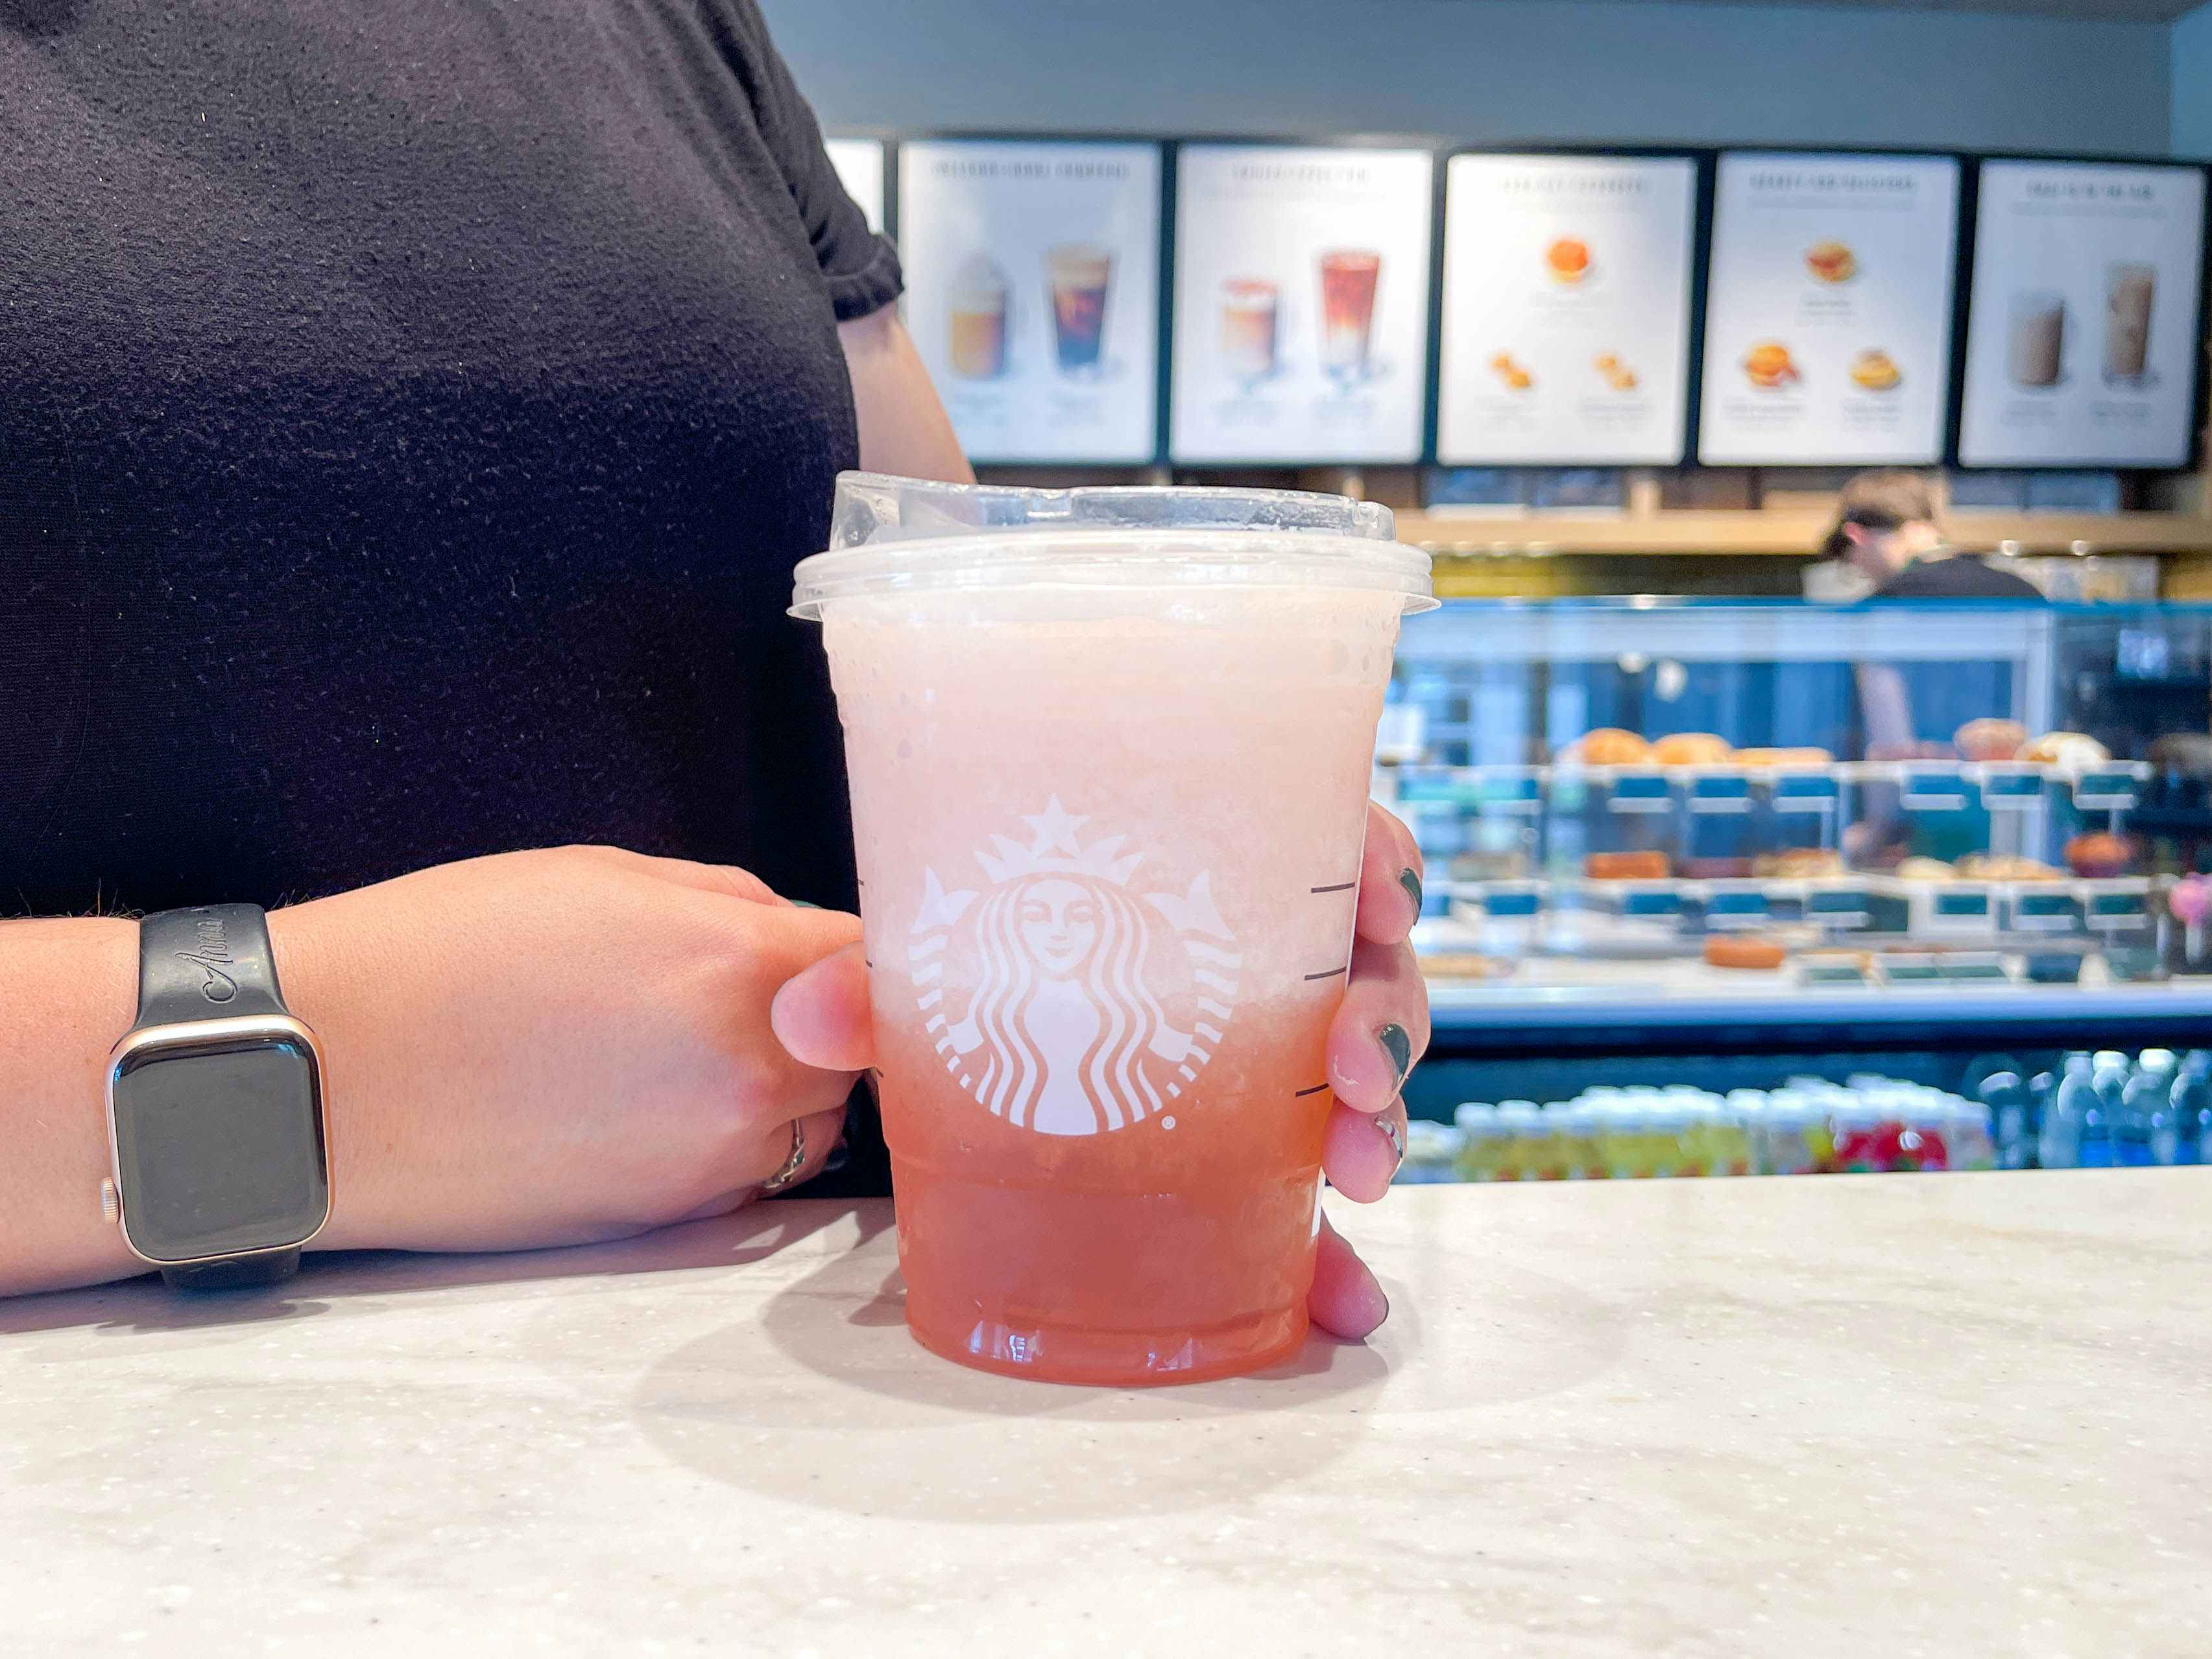 Starbucks Valentine's Cups 2021, Menu, Drinks, Uber Eats Code